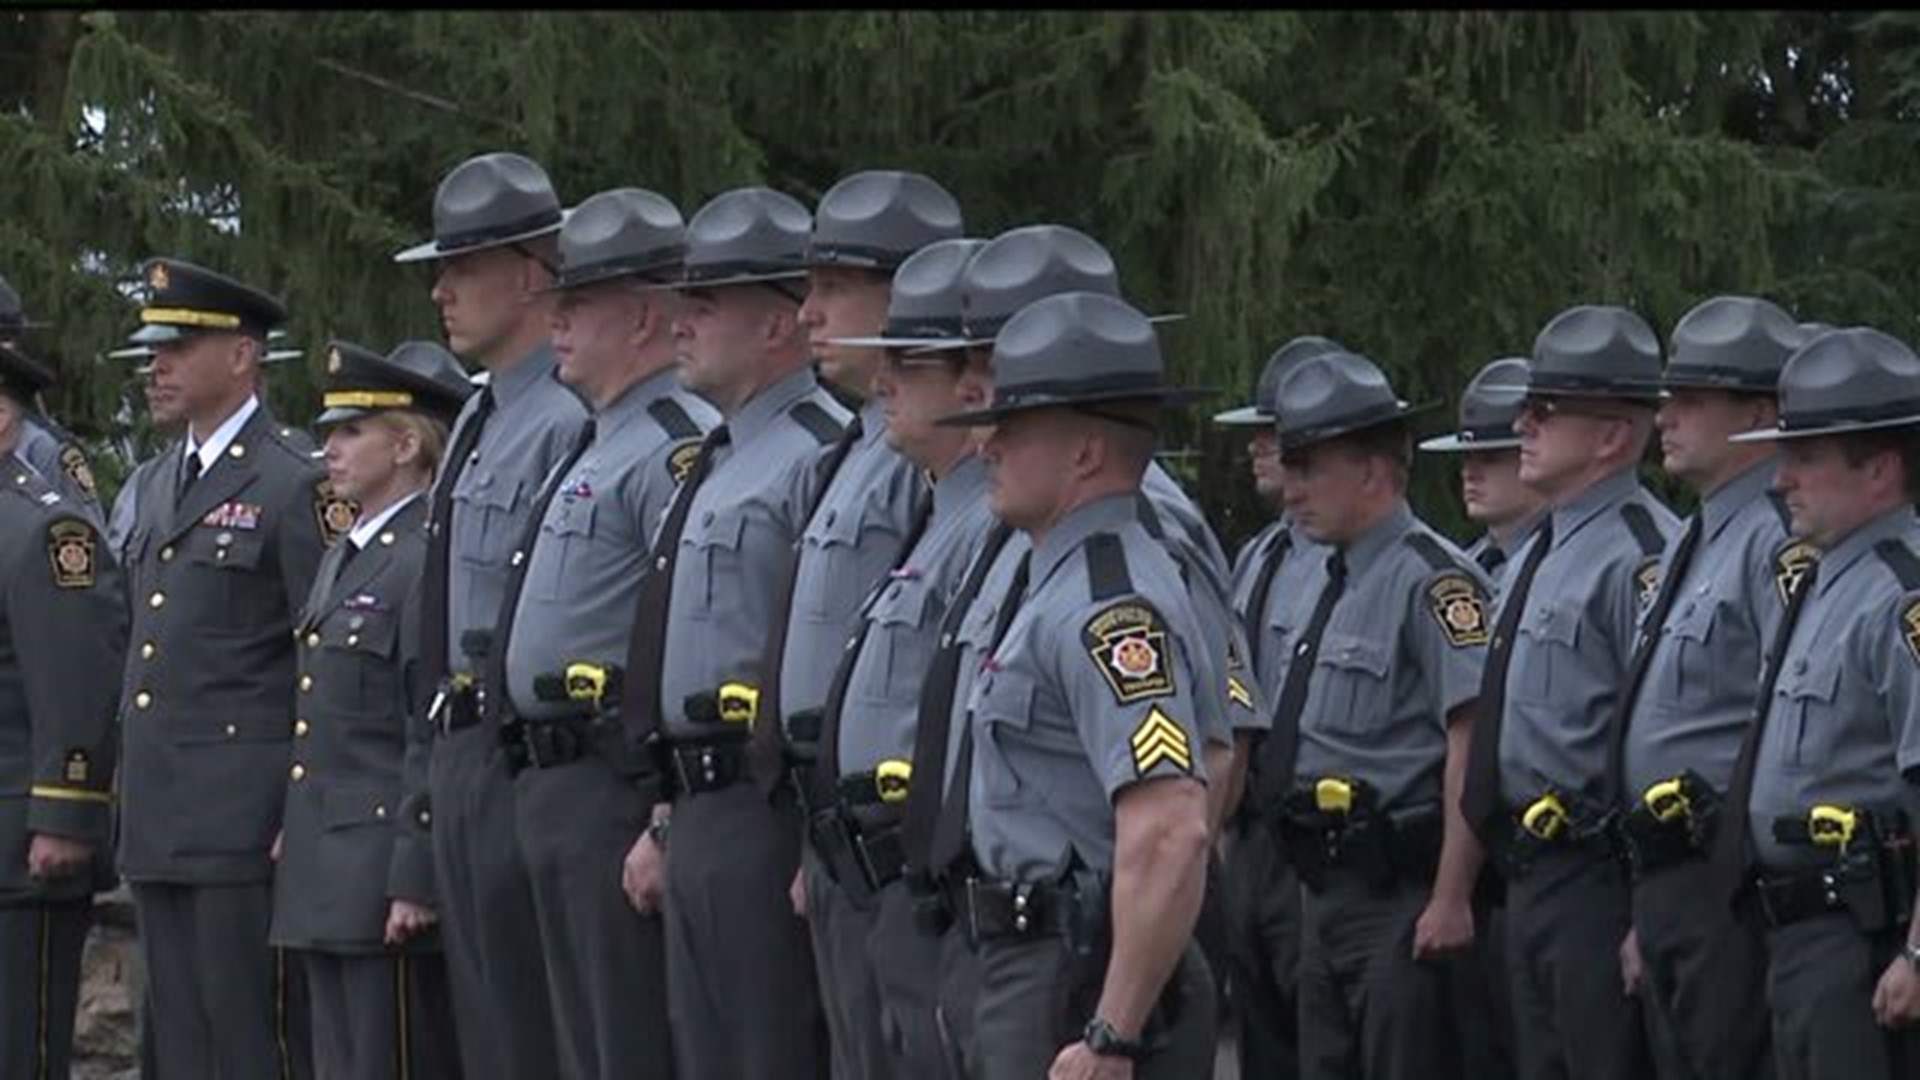 Police honor 96 fallen Troopers